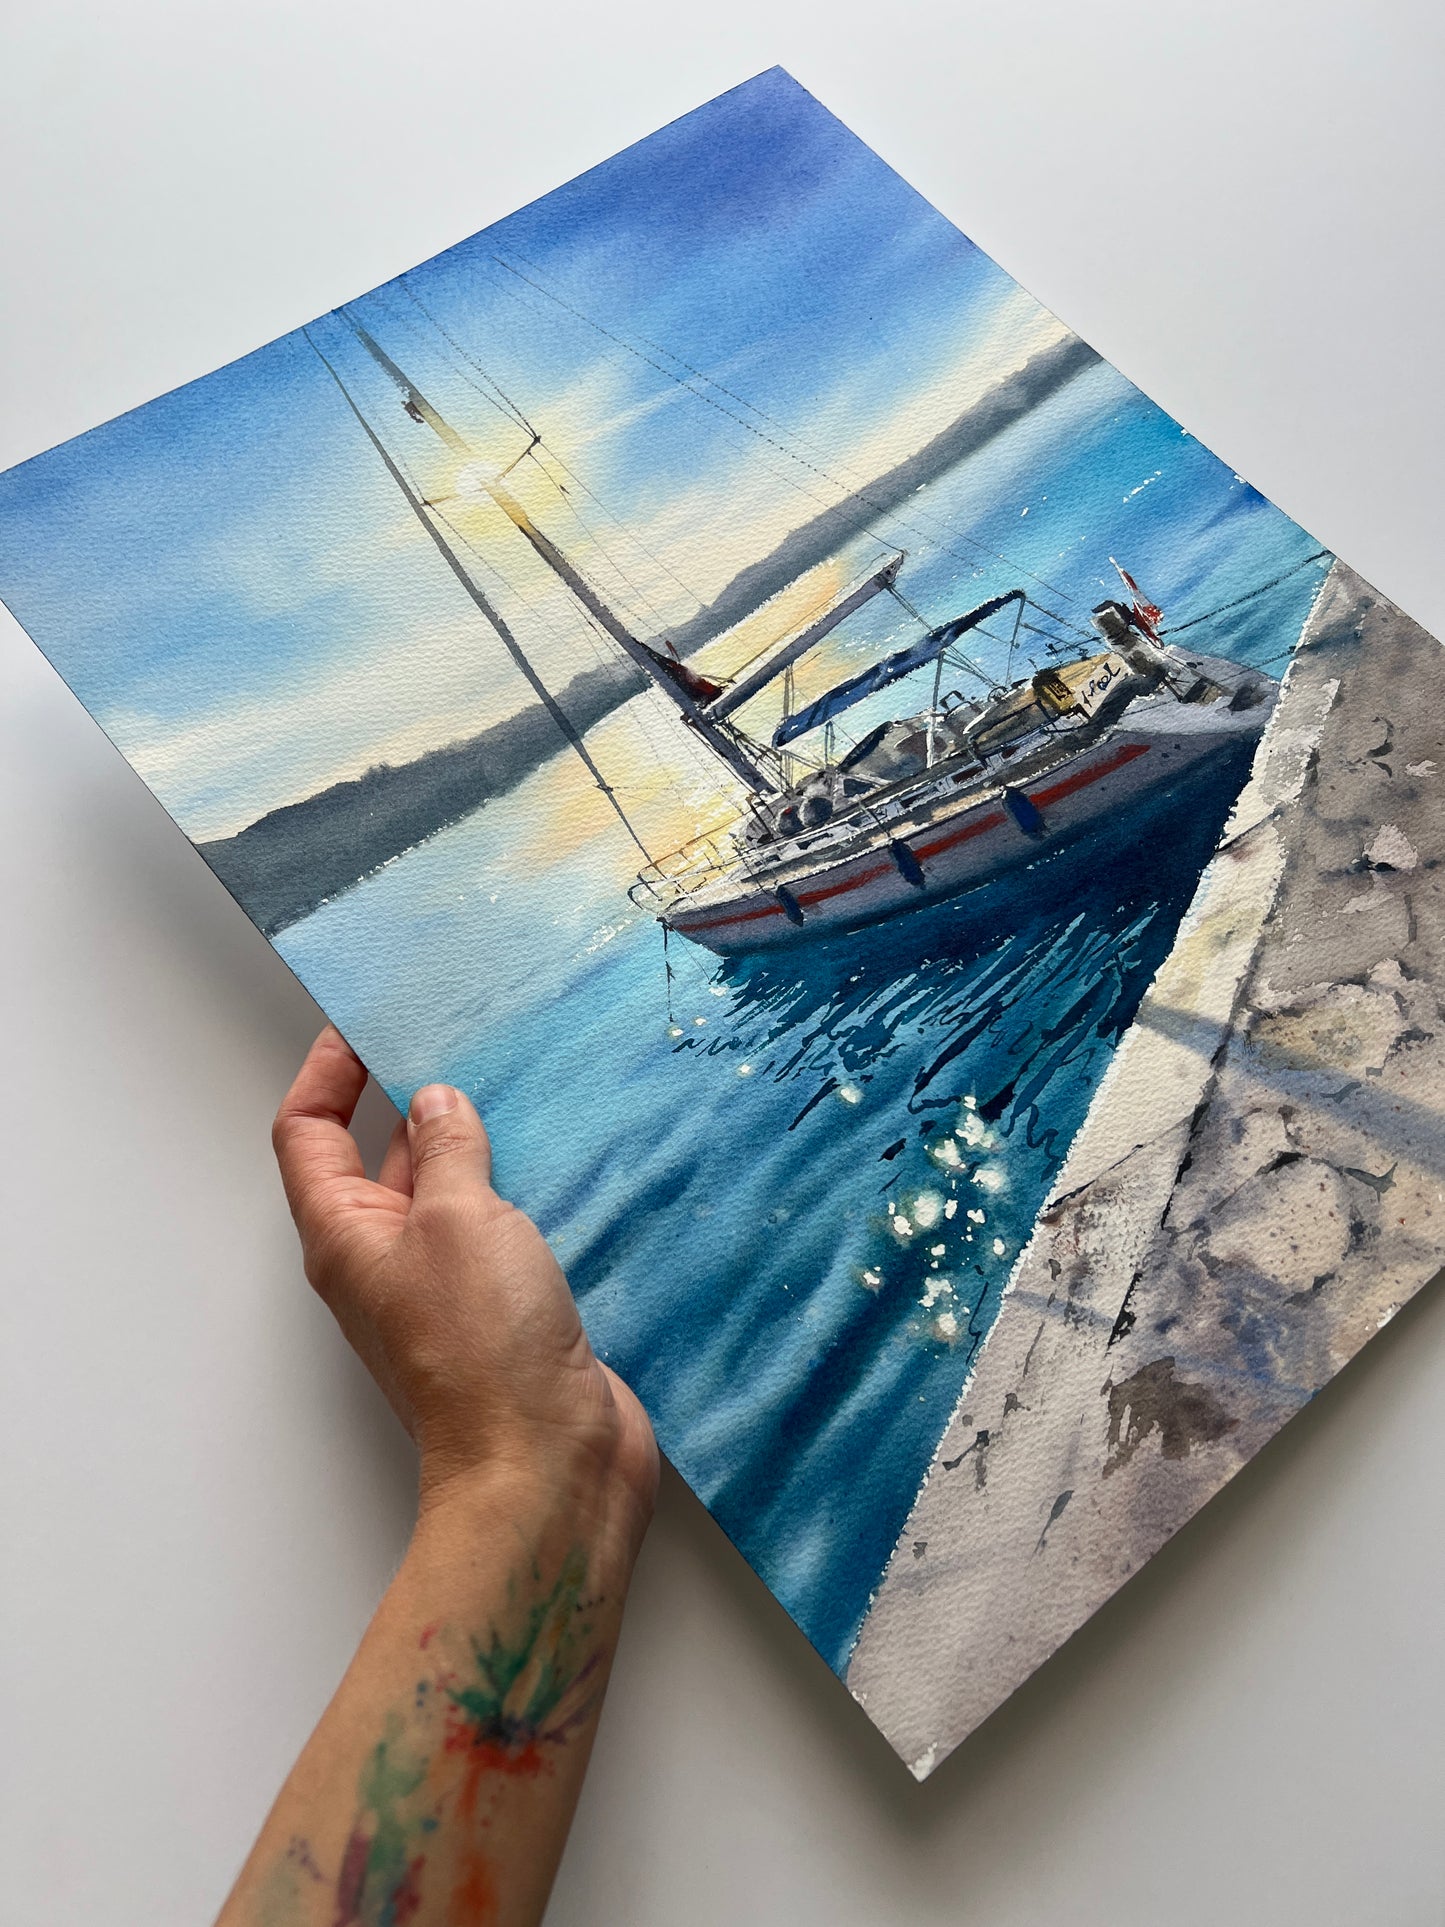 Sailboat Painting Watercolor Original, Yacht Artwork, Seascape Coast Art, Yachting Living Room Wall Decor, Gift, Blue